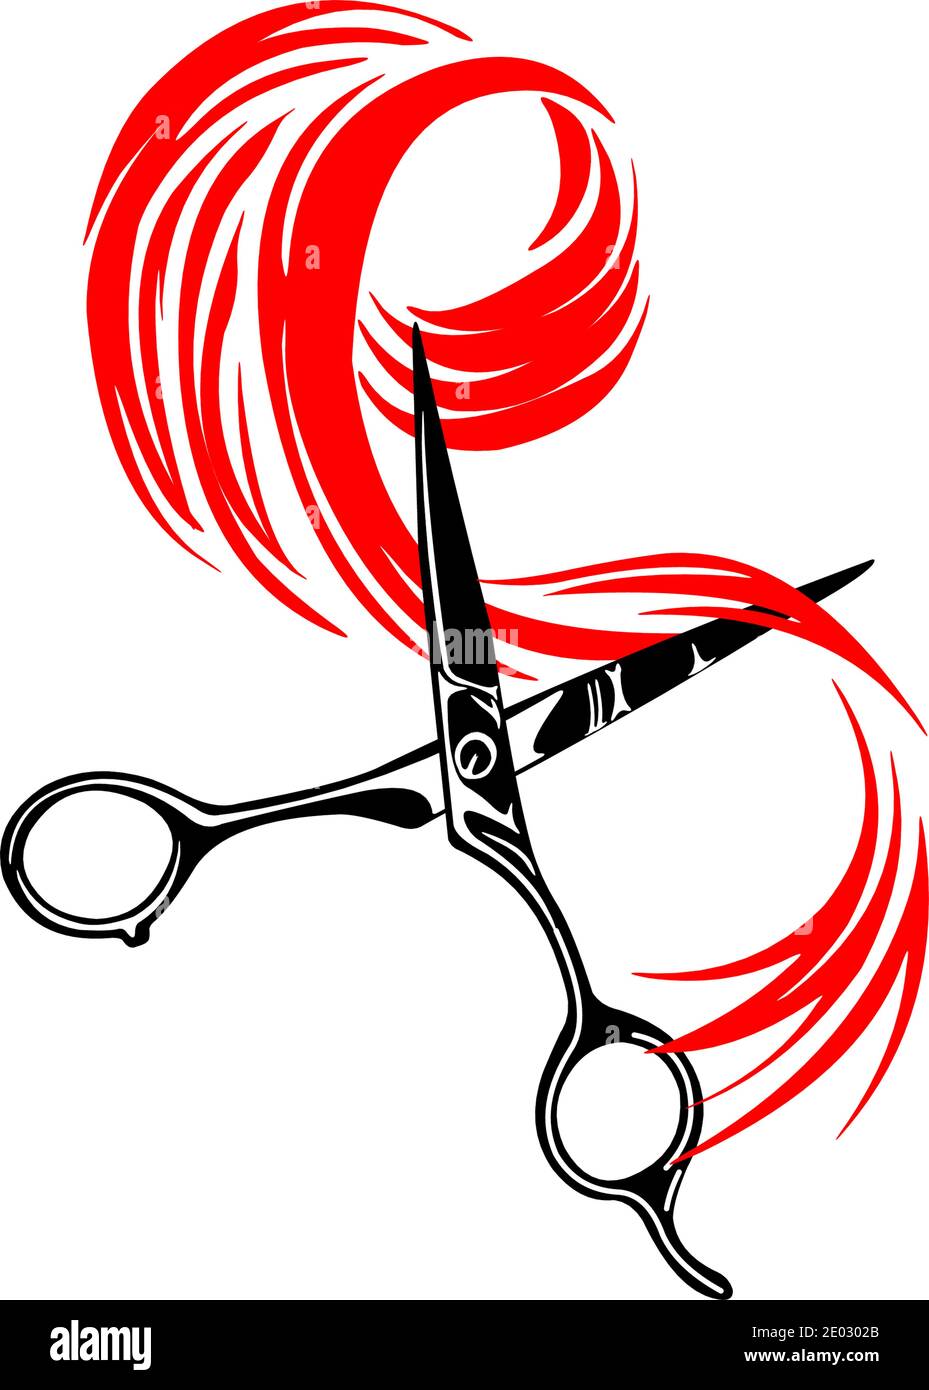 Cut off red hair lock for hair salon. Stock Vector